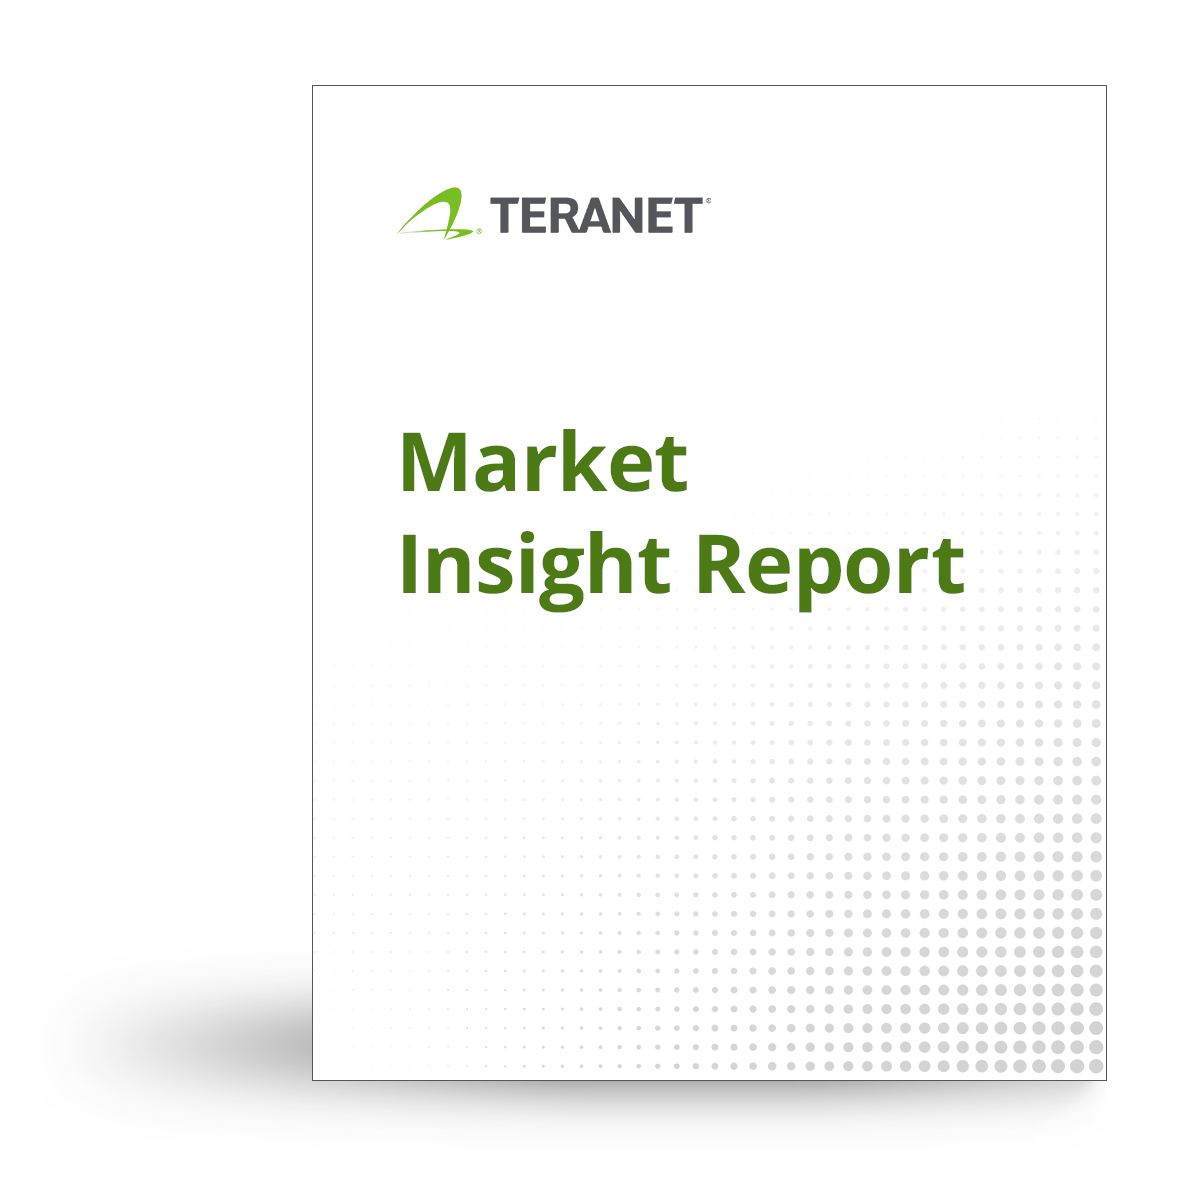 Teranet Market Insight Report